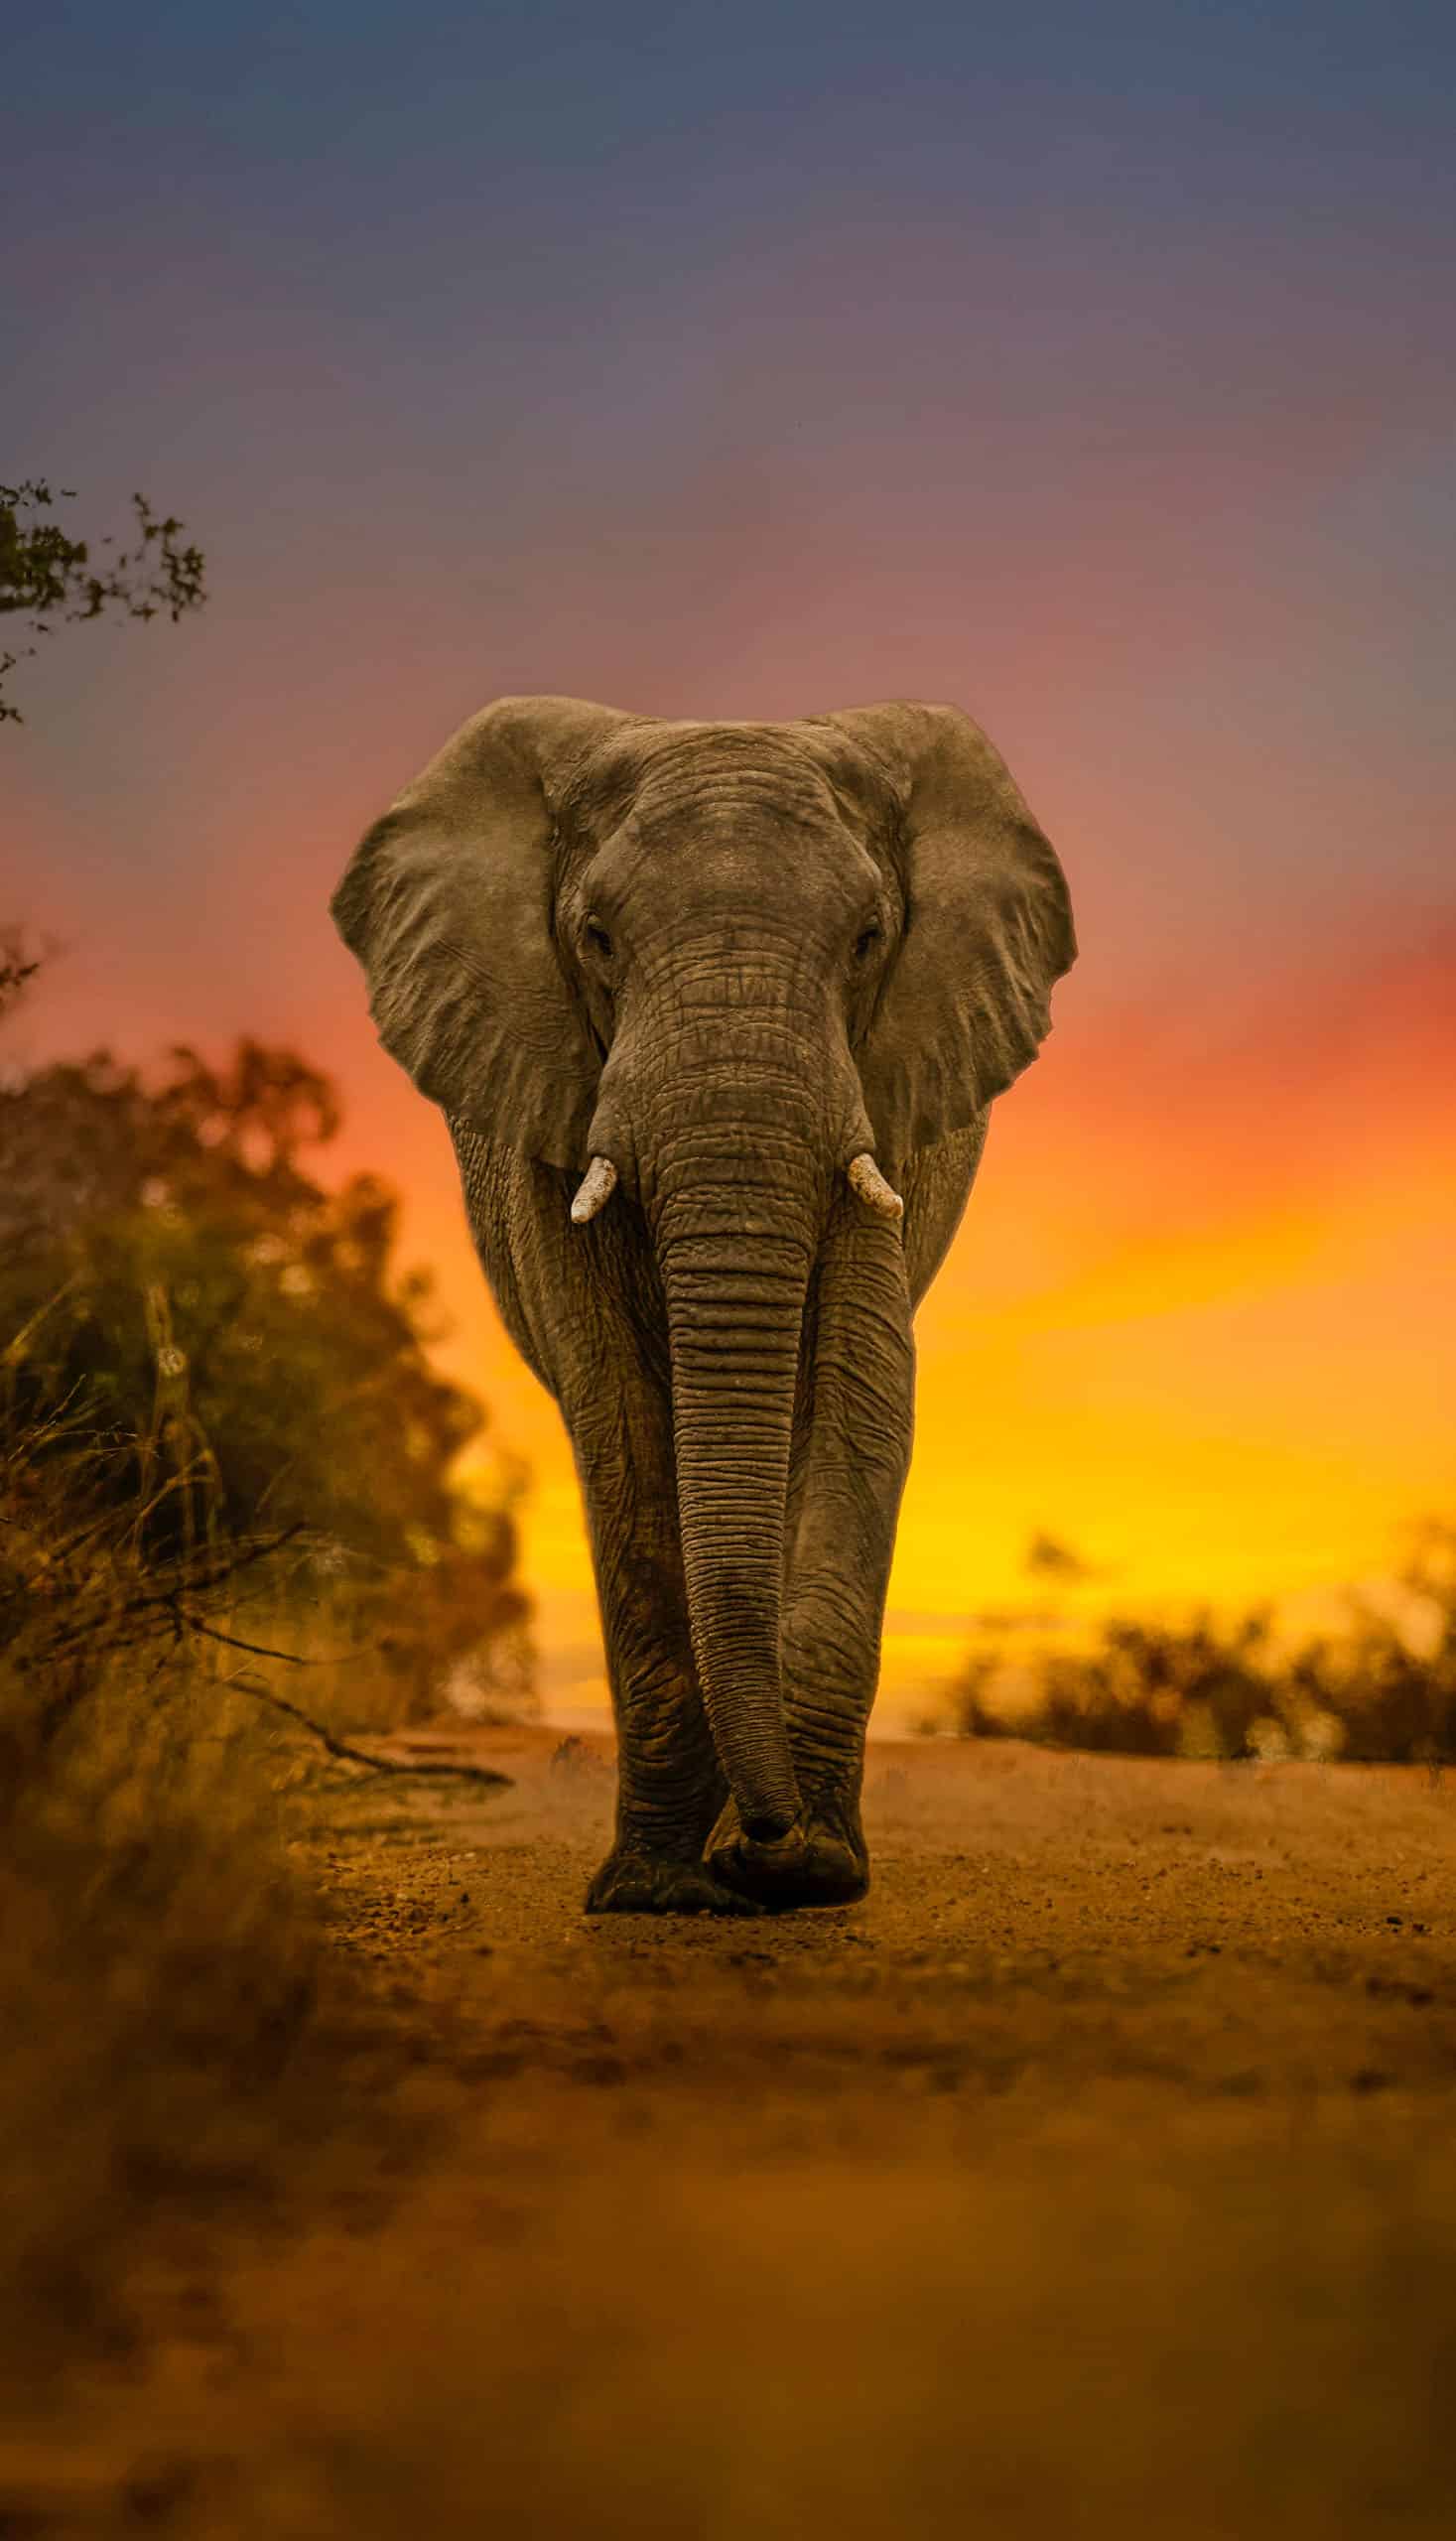 An elephant walking at sunset.